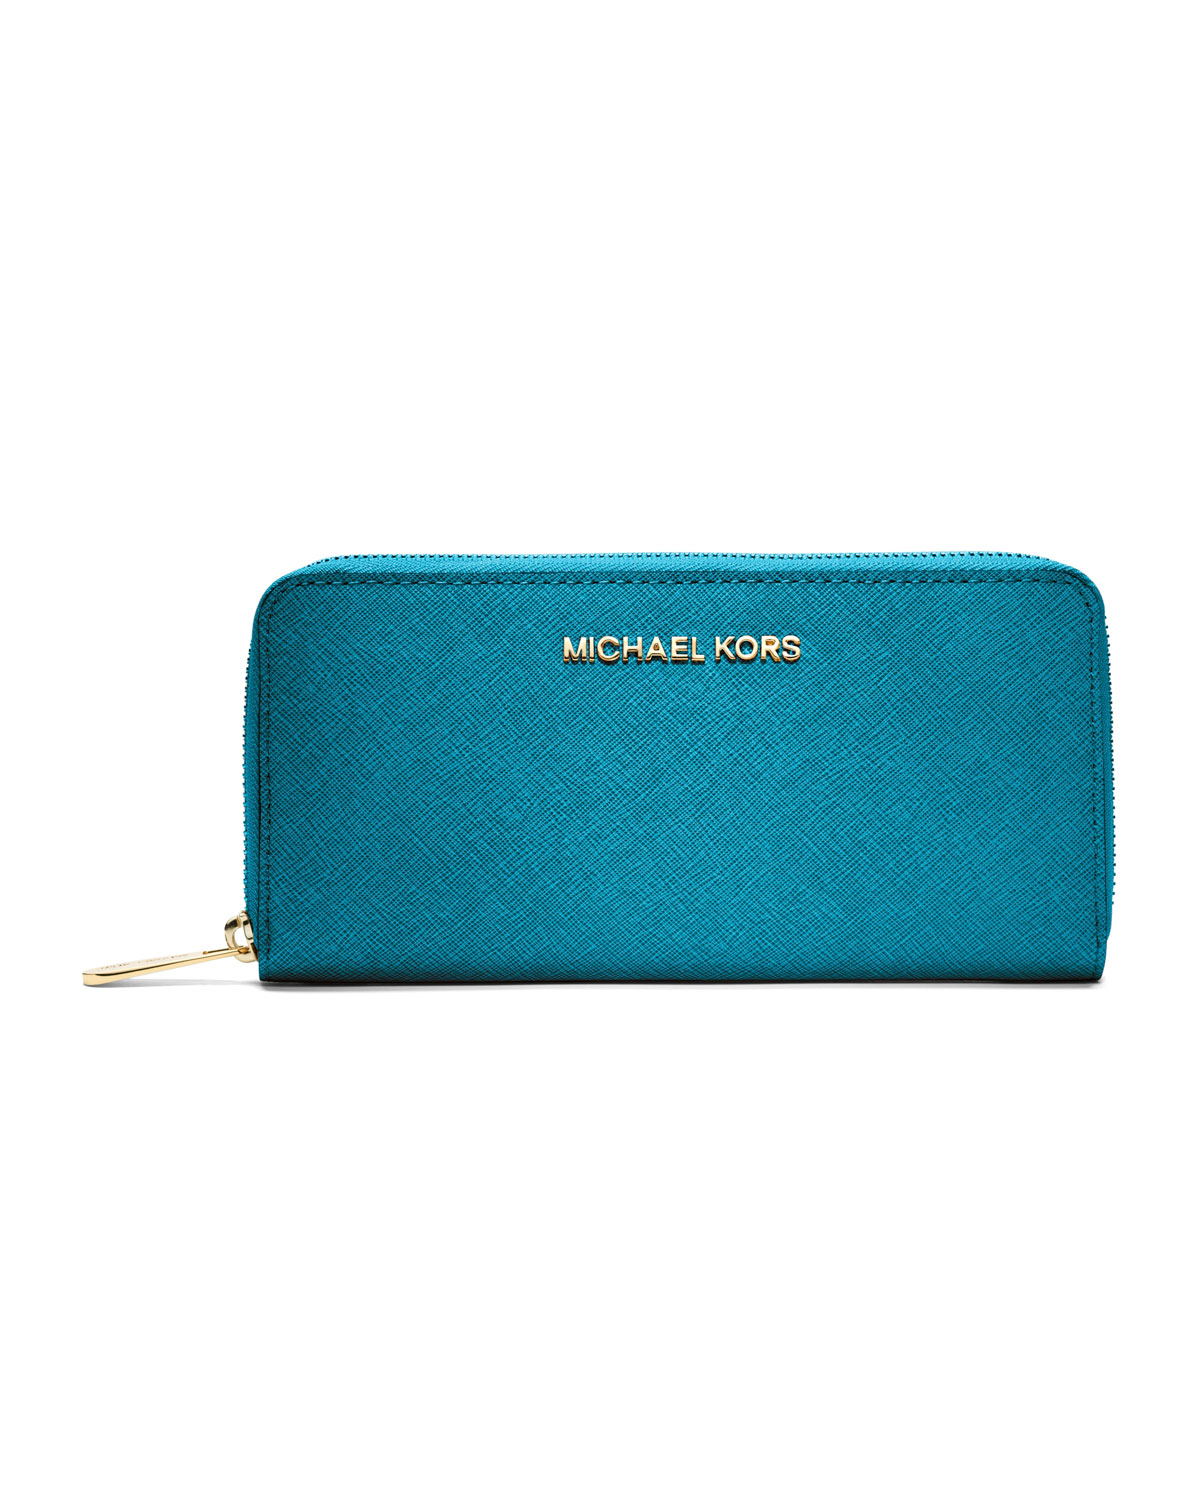 michael kors turquoise wallet